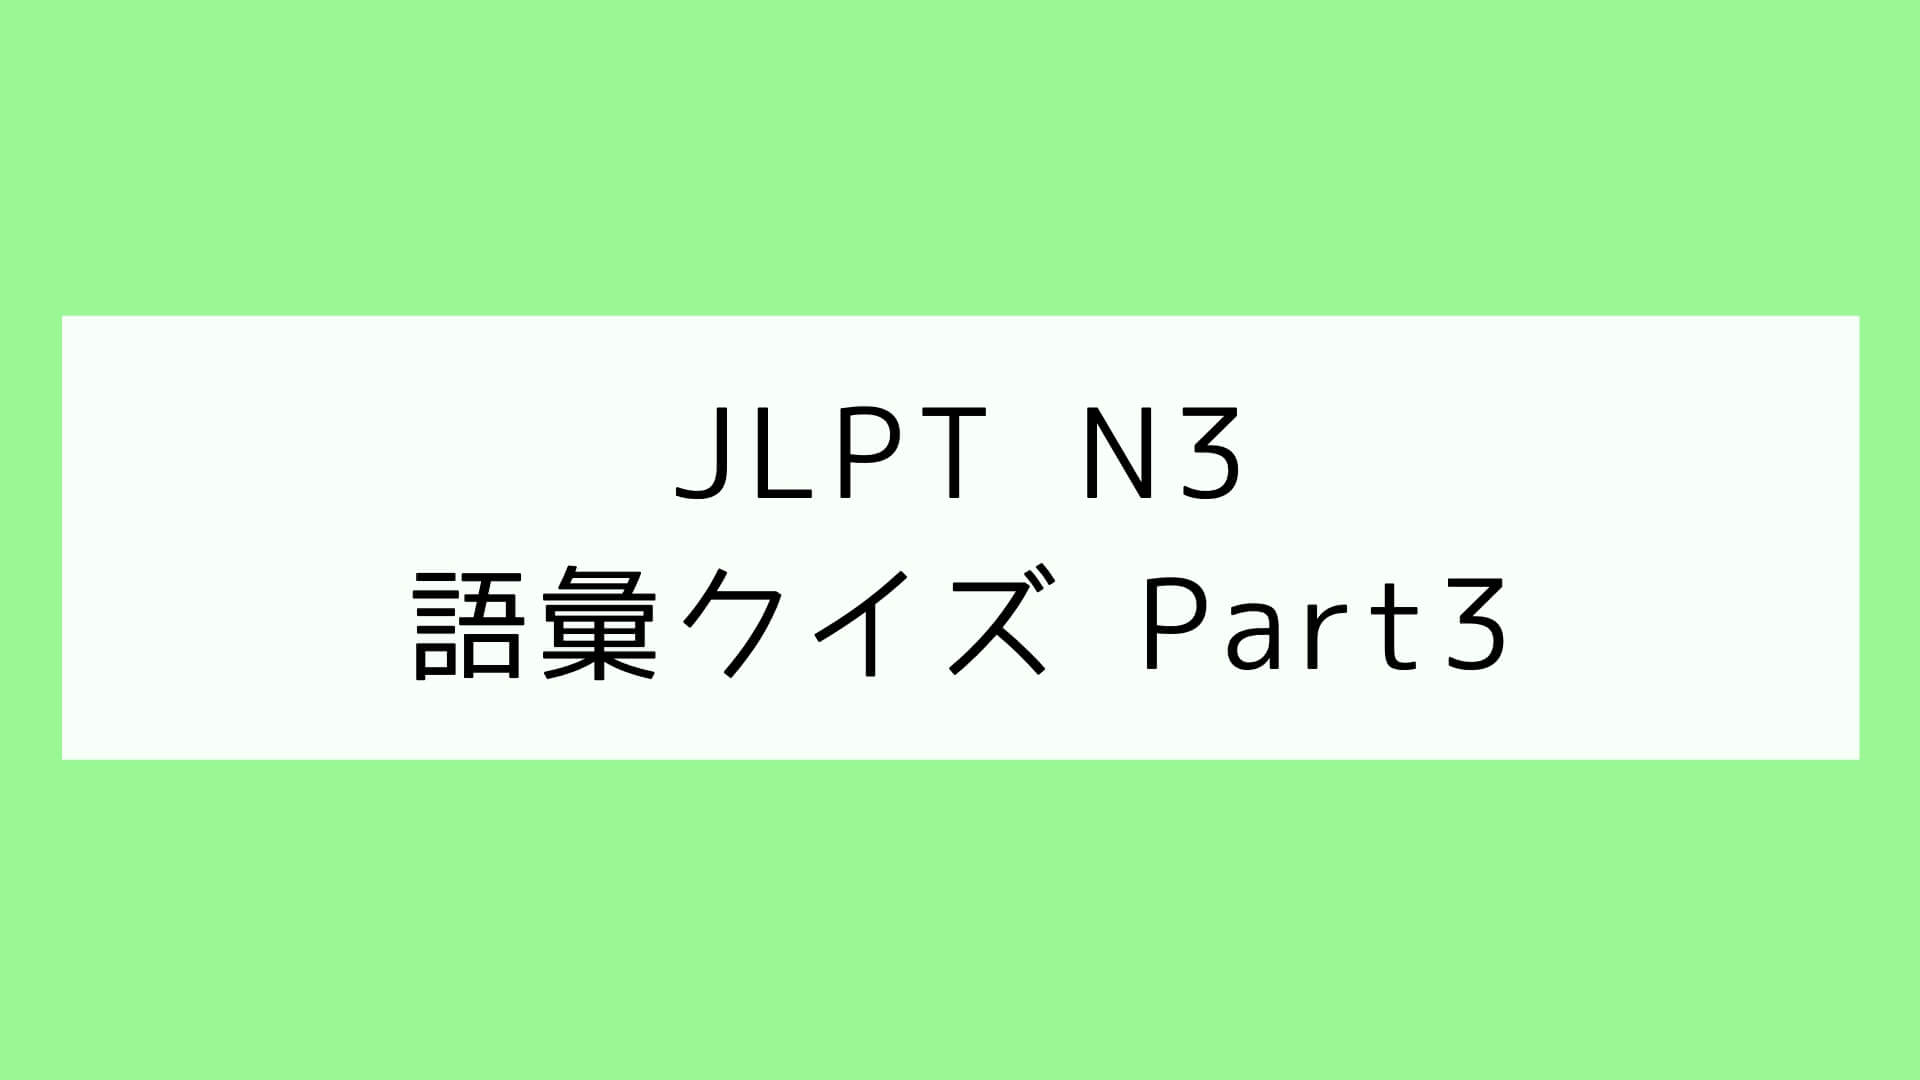 【JLPT N3】語彙クイズ Part3